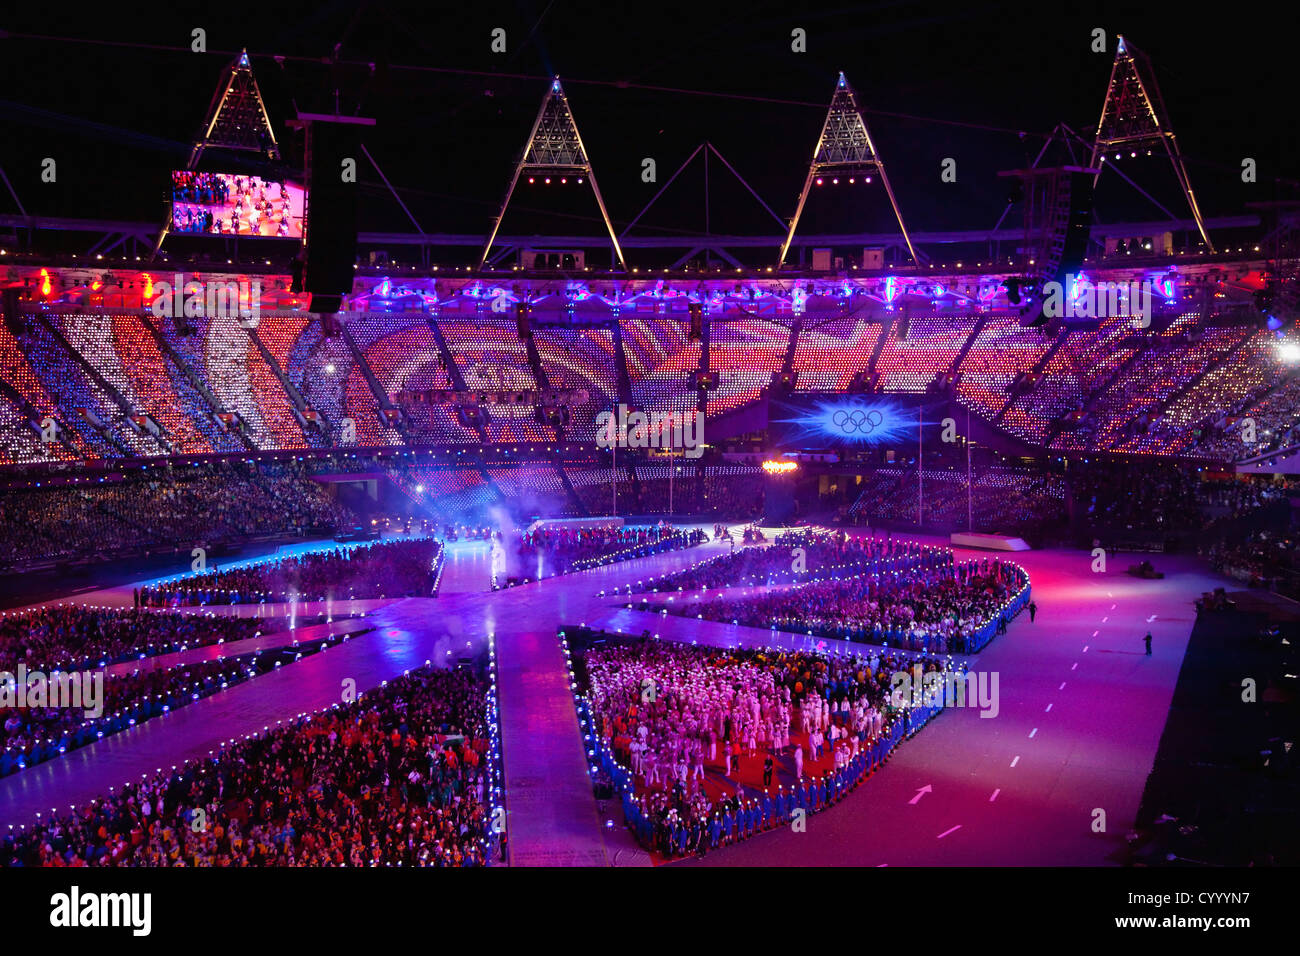 Inghilterra, Londra, Stratford, giochi olimpici cerimonia di chiusura luce display in stadium. Foto Stock